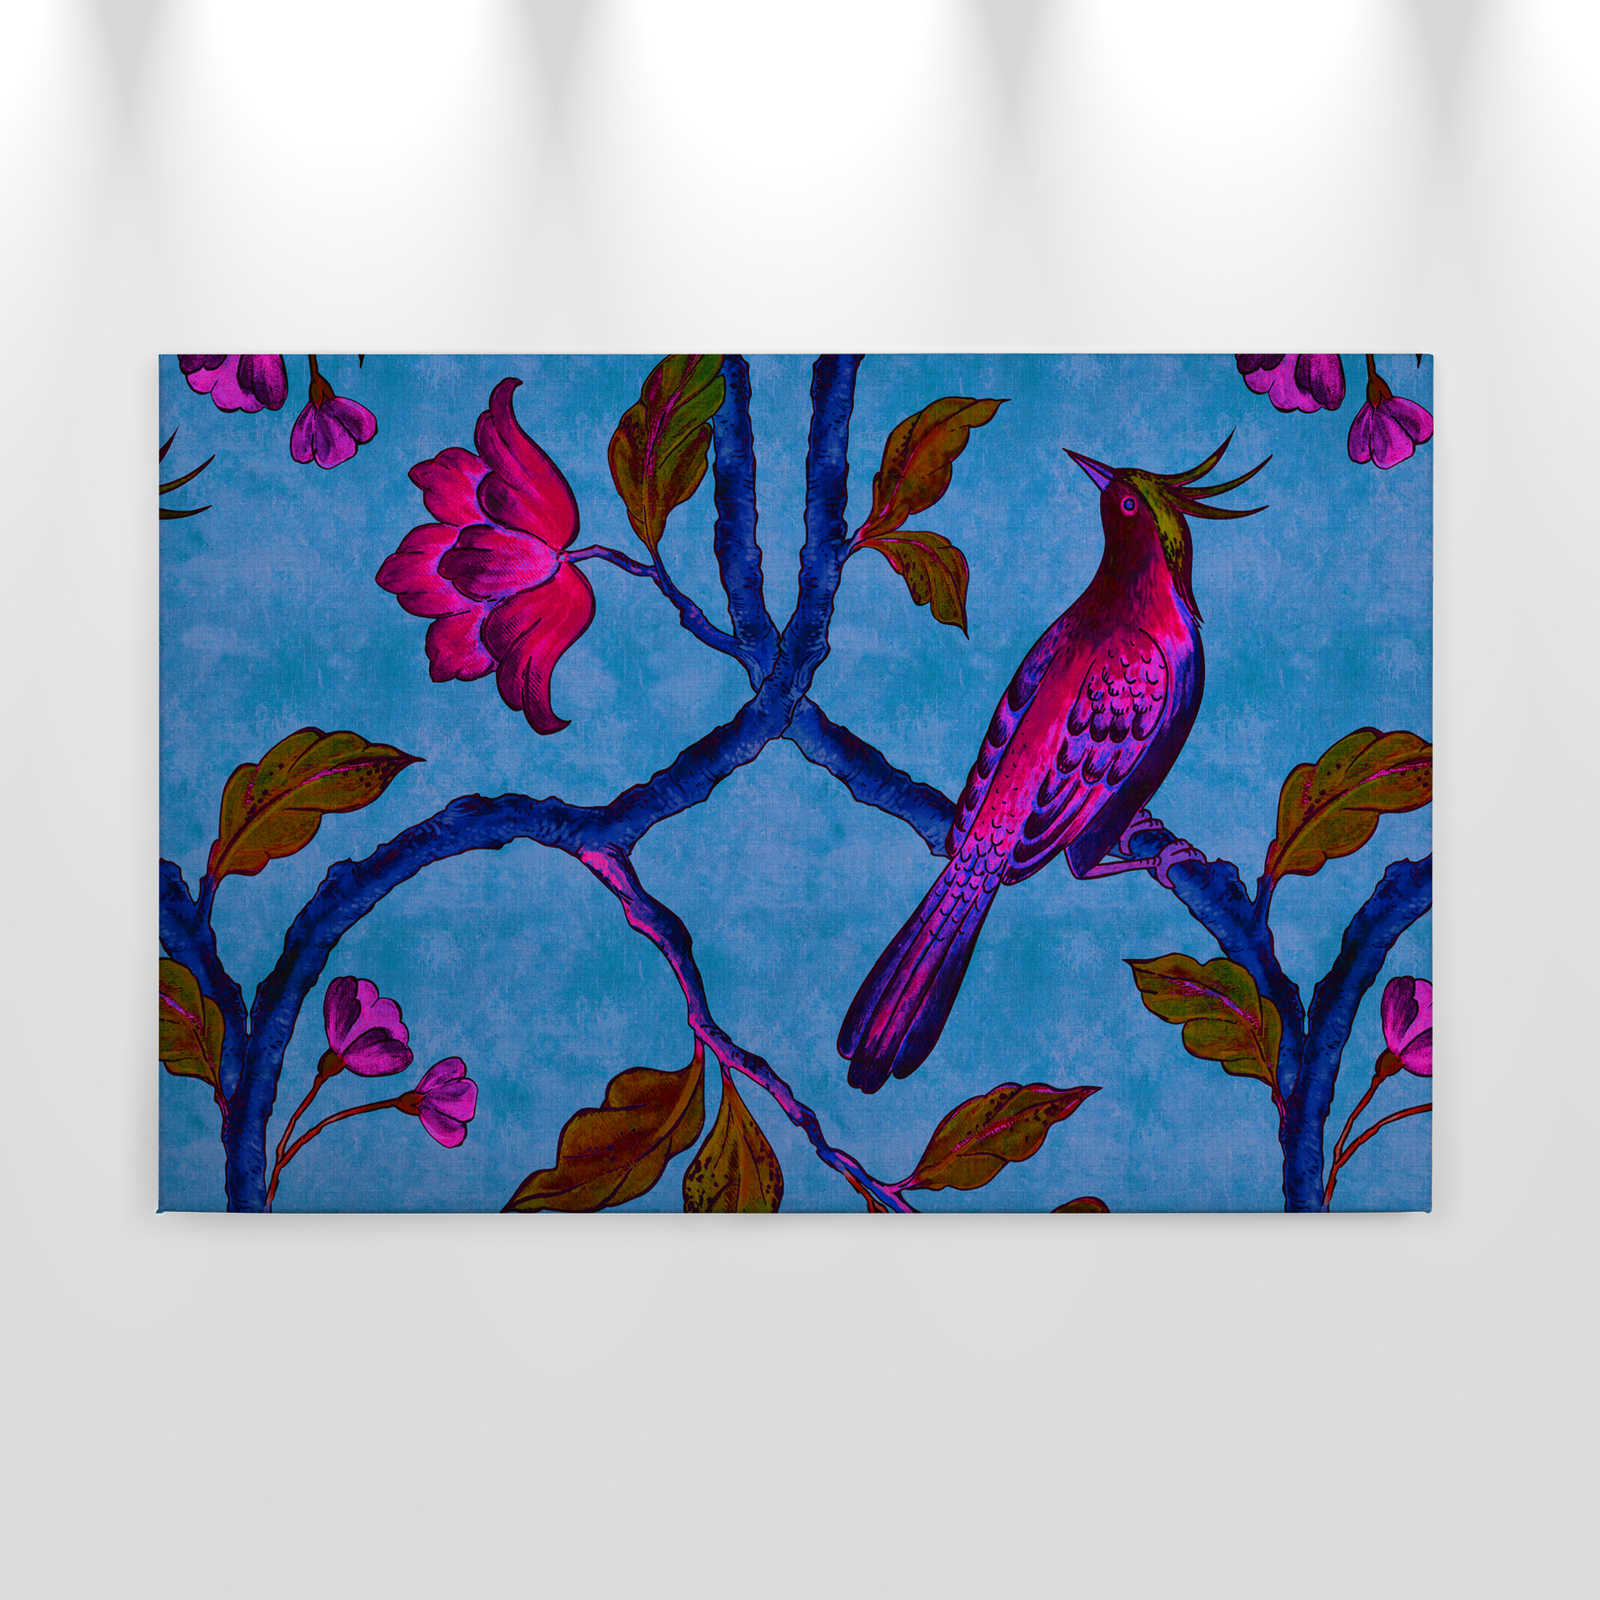             Bird Of Paradis 1 - Cuadro en lienzo con estructura de lino natural con ave del paraíso - 0,90 m x 0,60 m
        